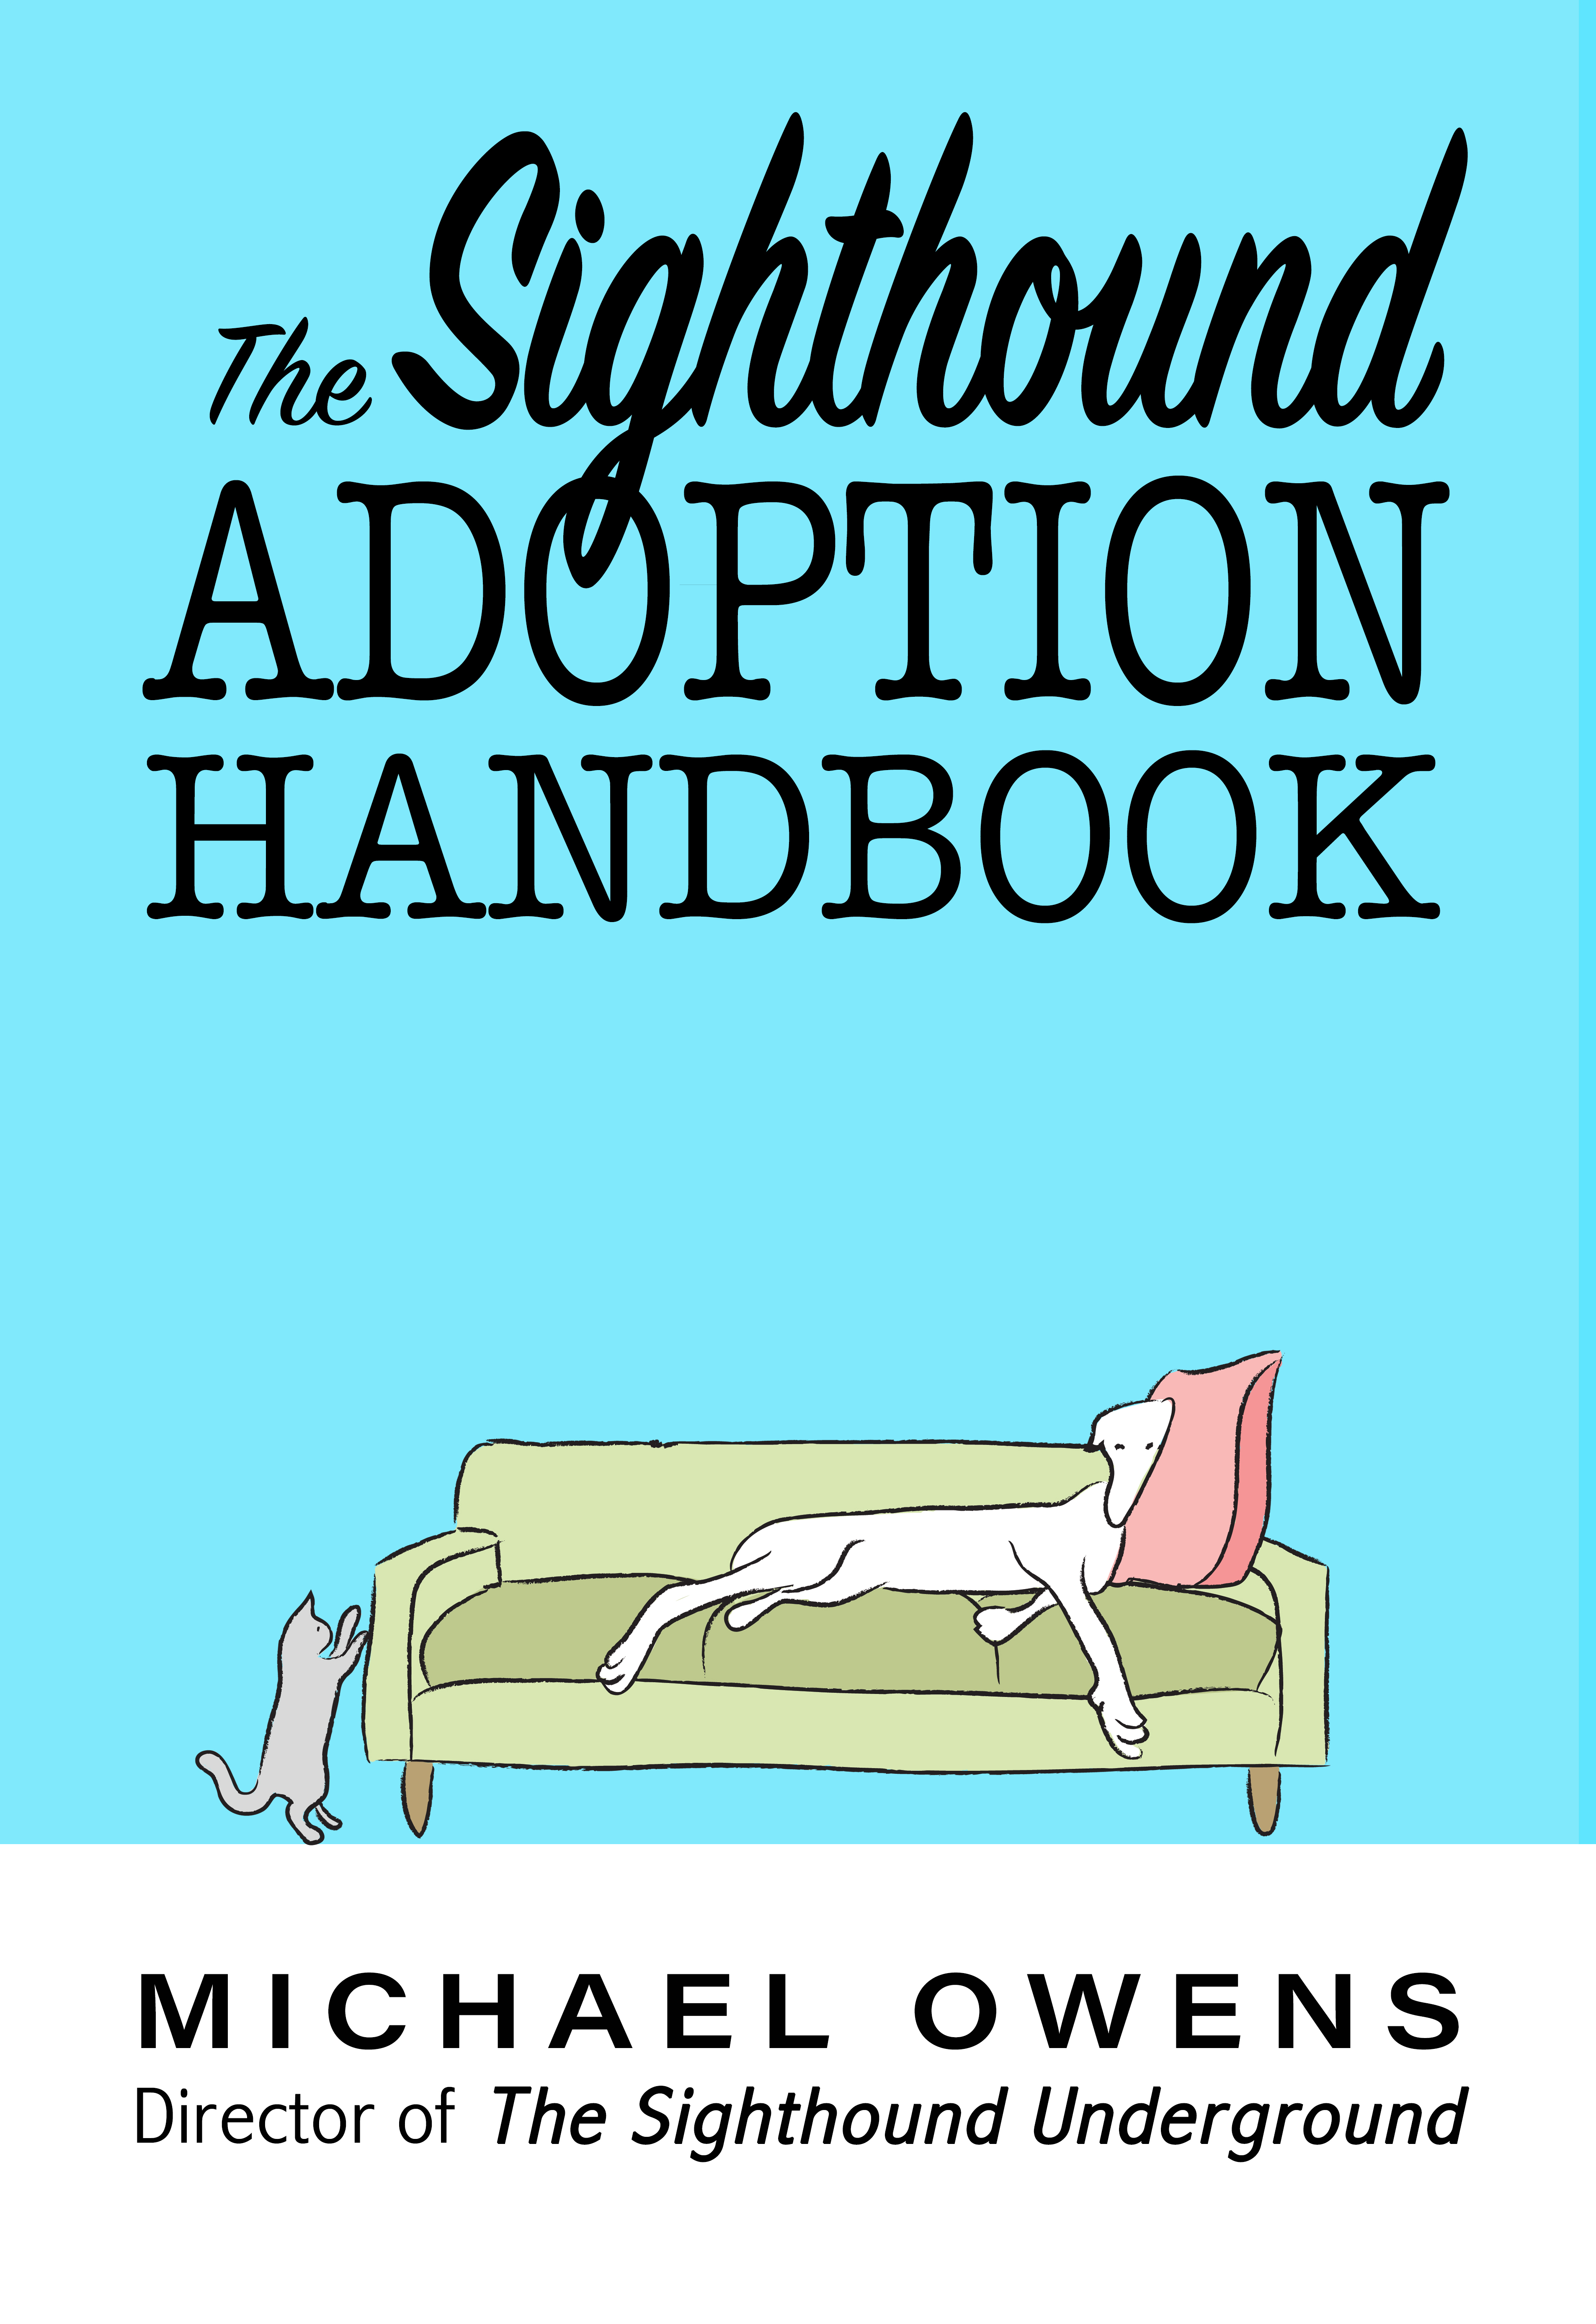 Sighthound Adoption Handbook